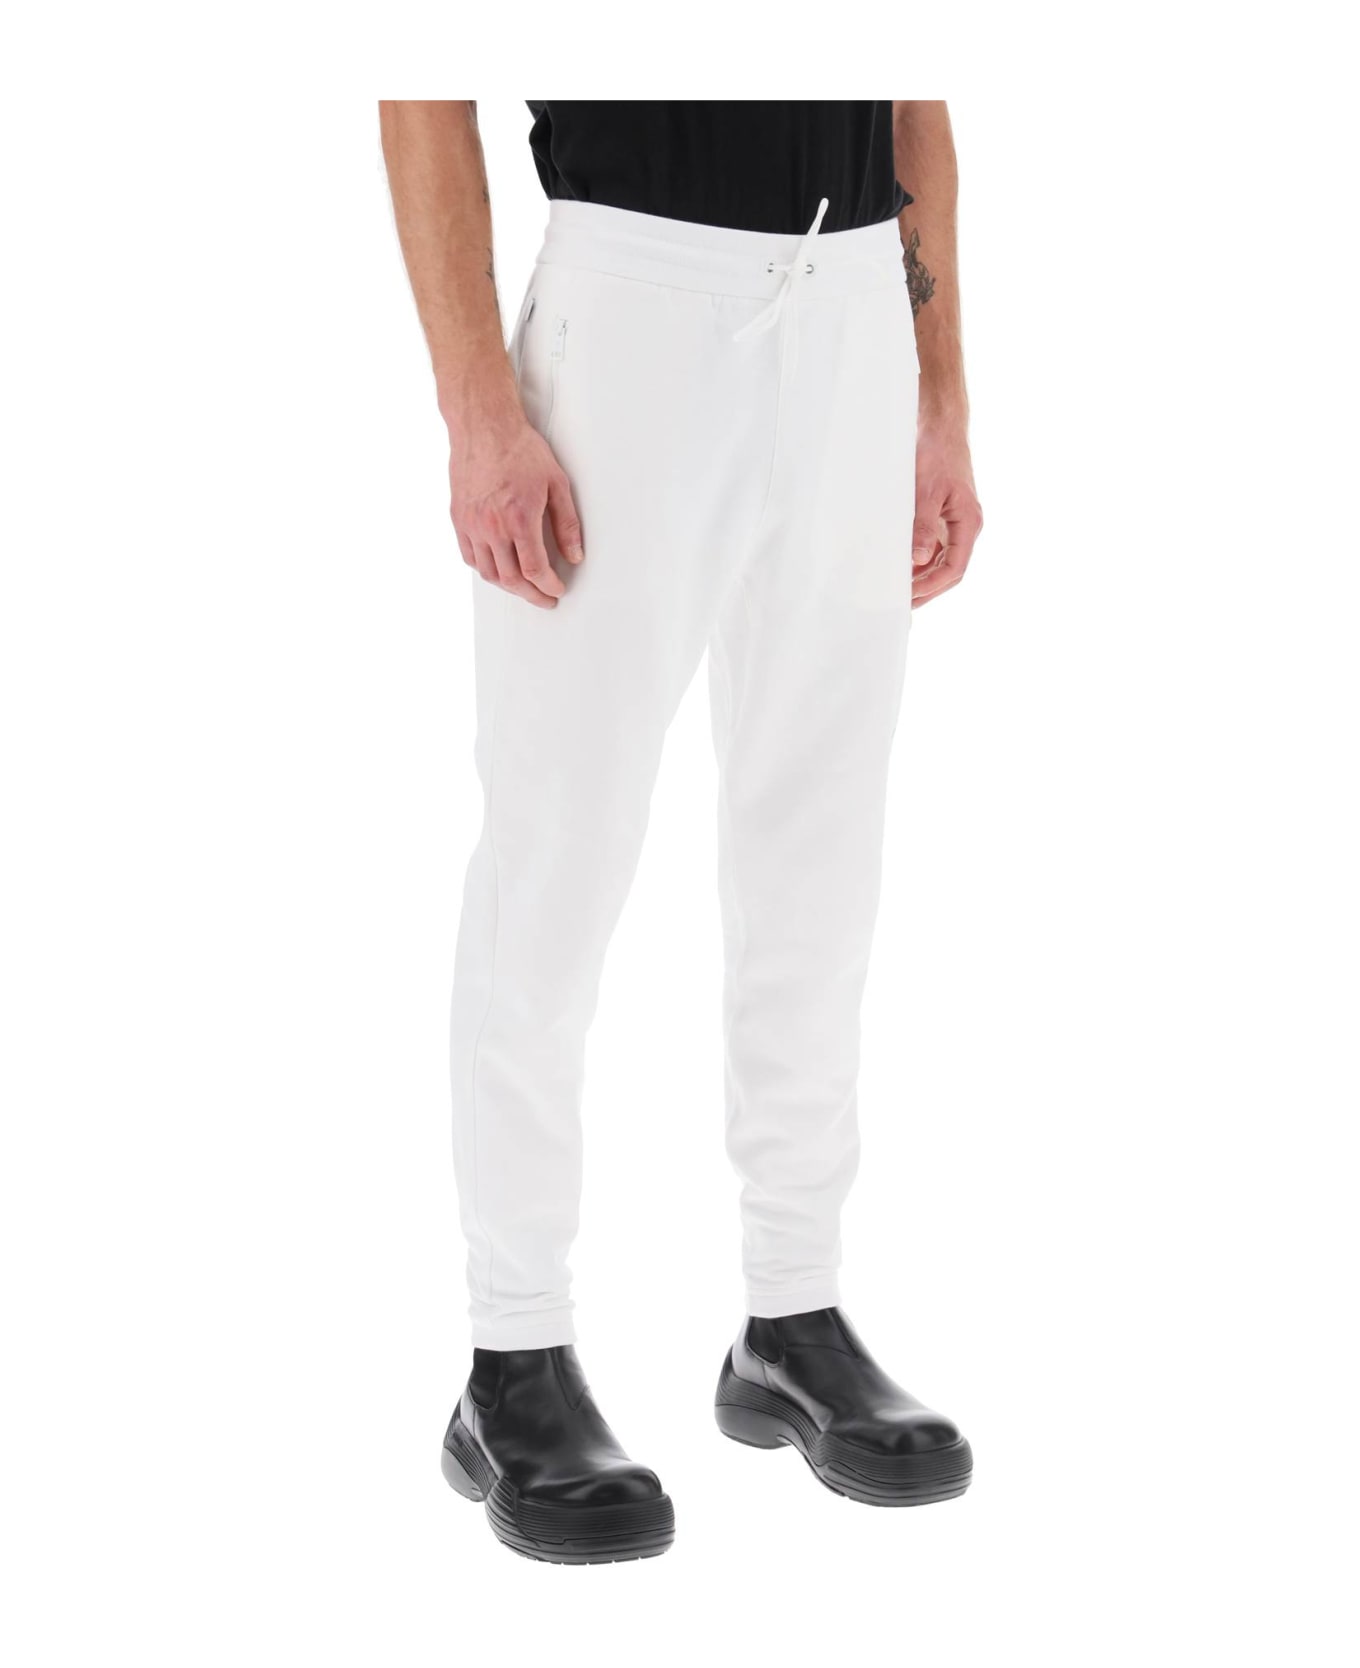 Moncler Genius Tapered Cotton Sweatpants - 001 スウェットパンツ